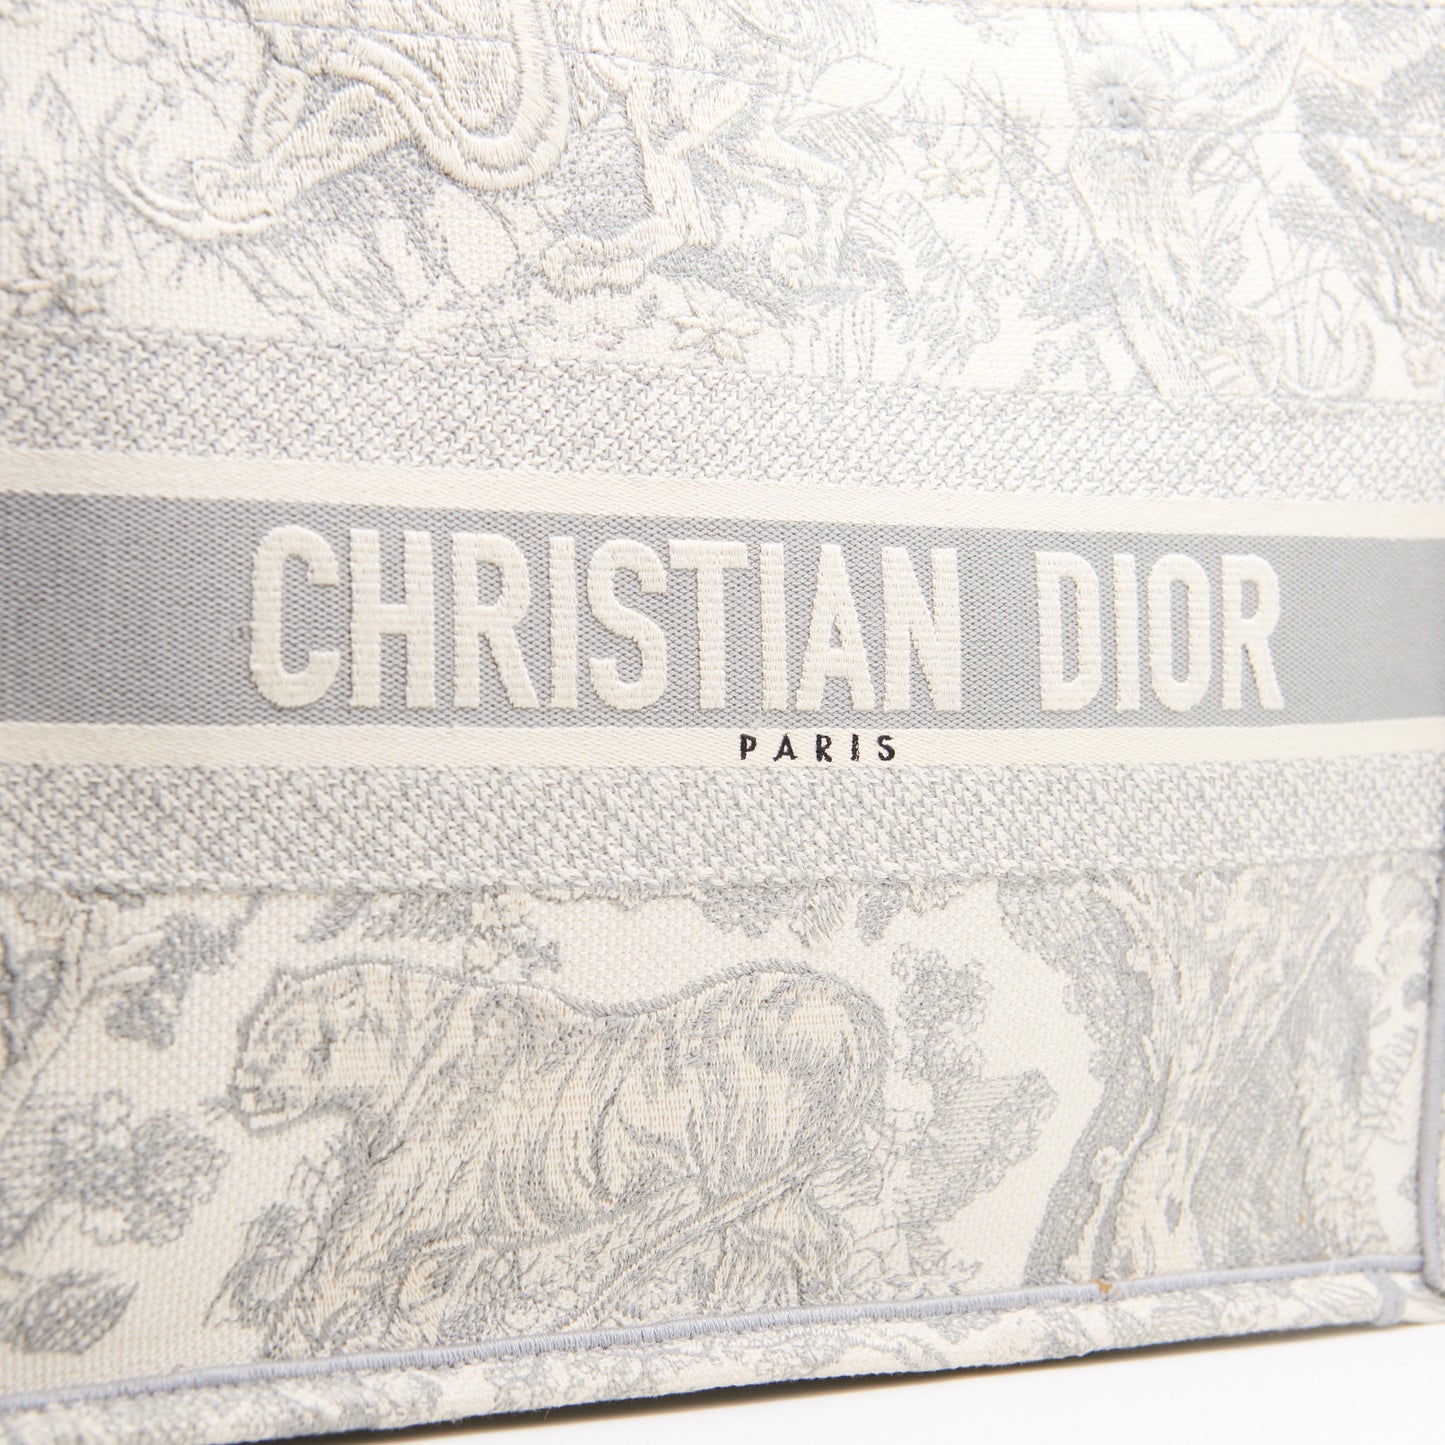 Christian Dior Canvas Medium Totes in Grey